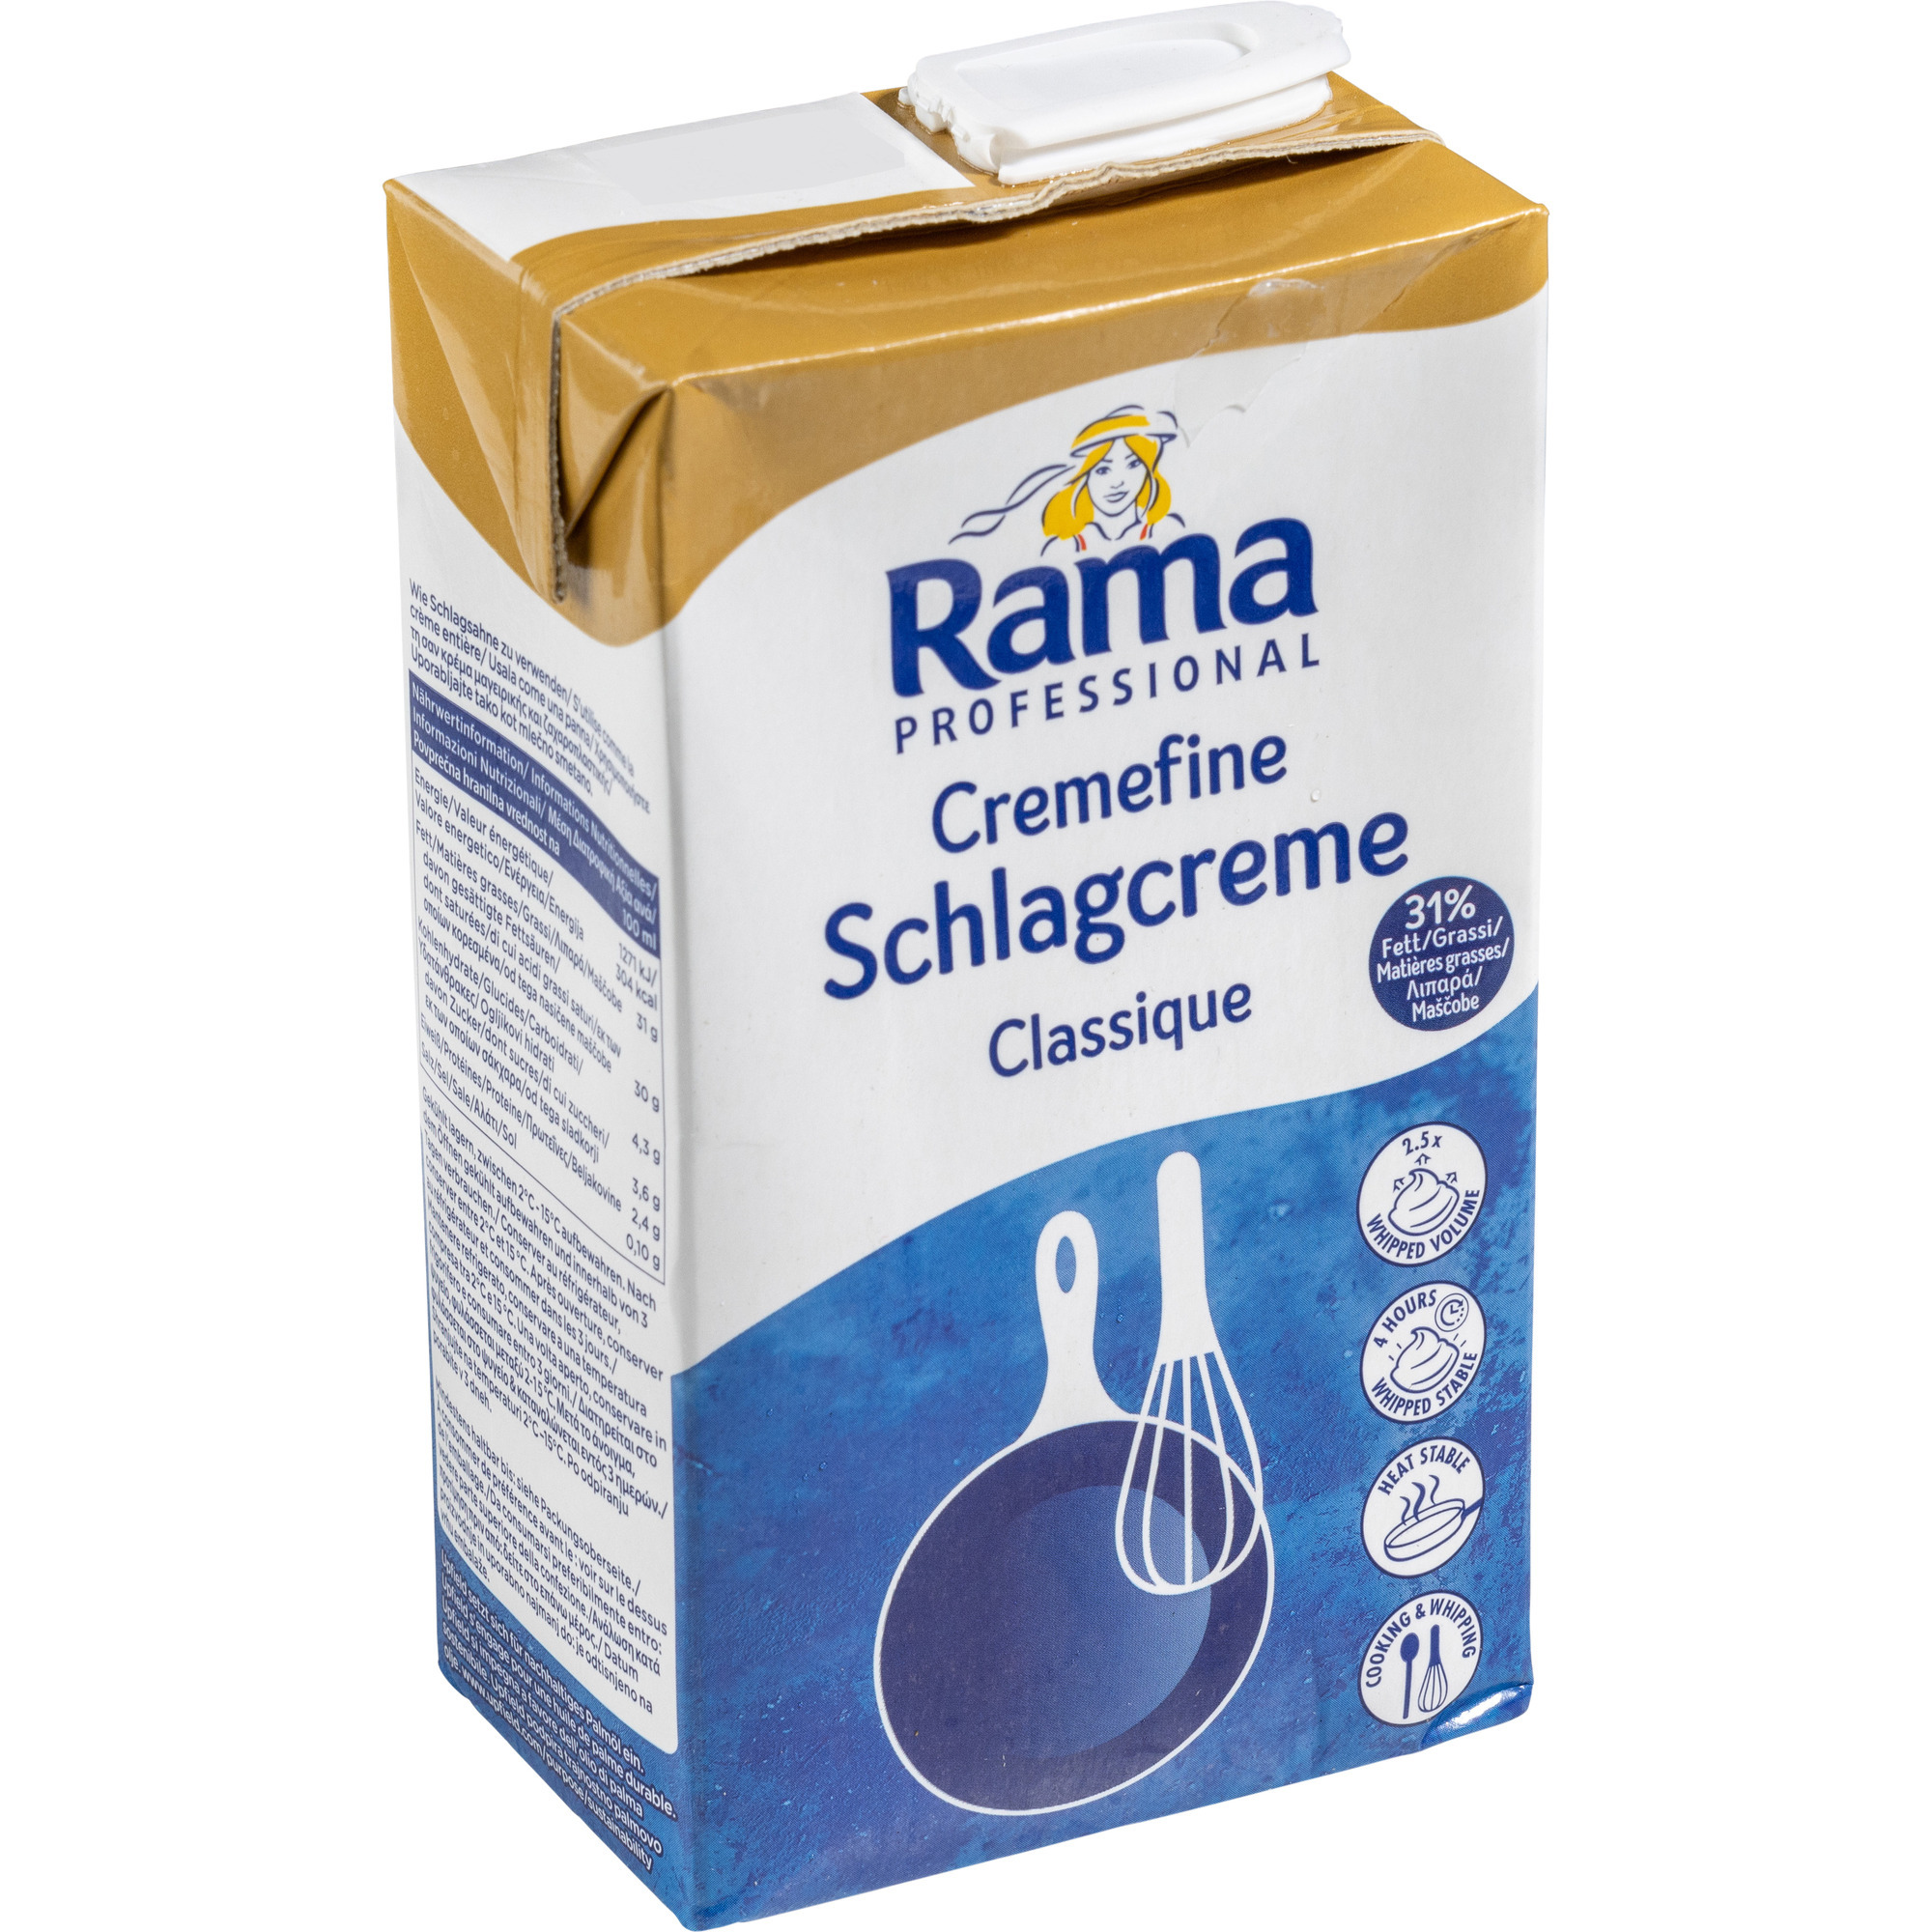 Rama Cremefine 1l, šľahanie 31% tuk